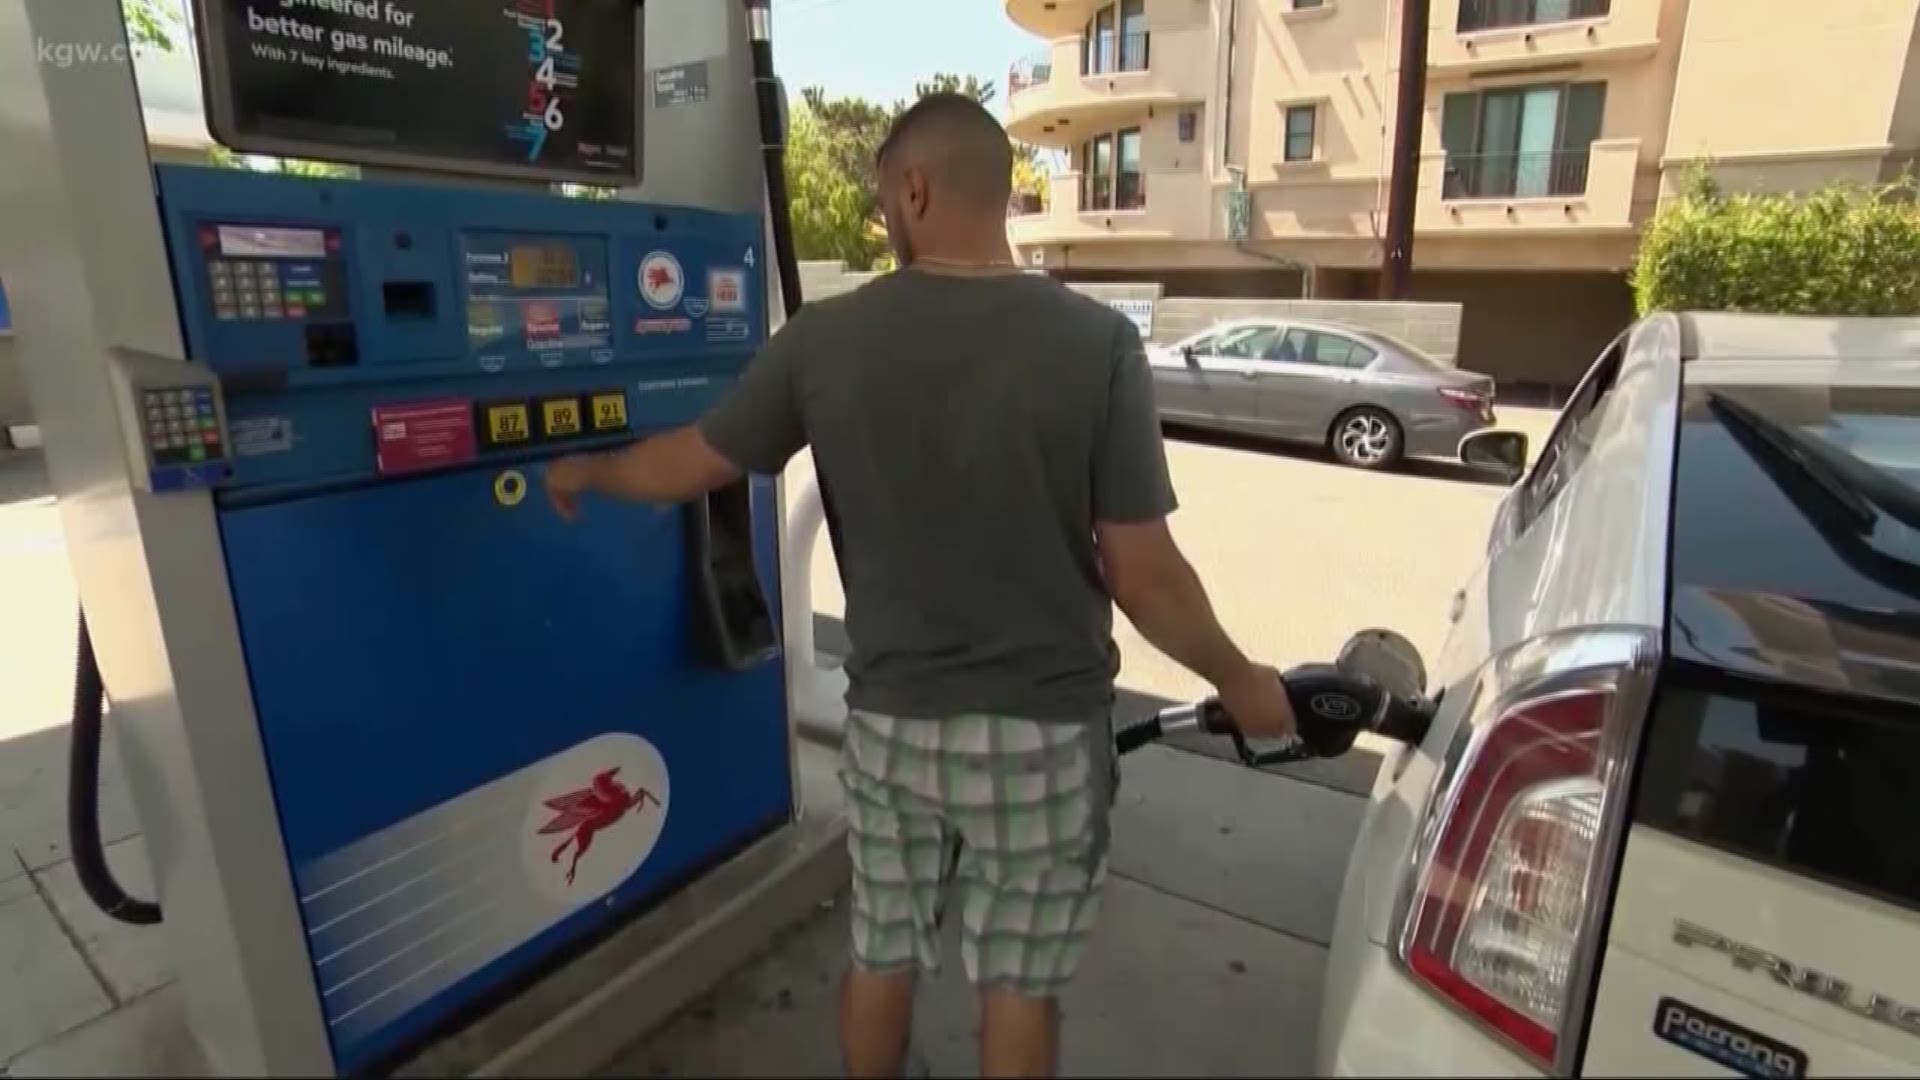 Three easy ways to find cheap gas